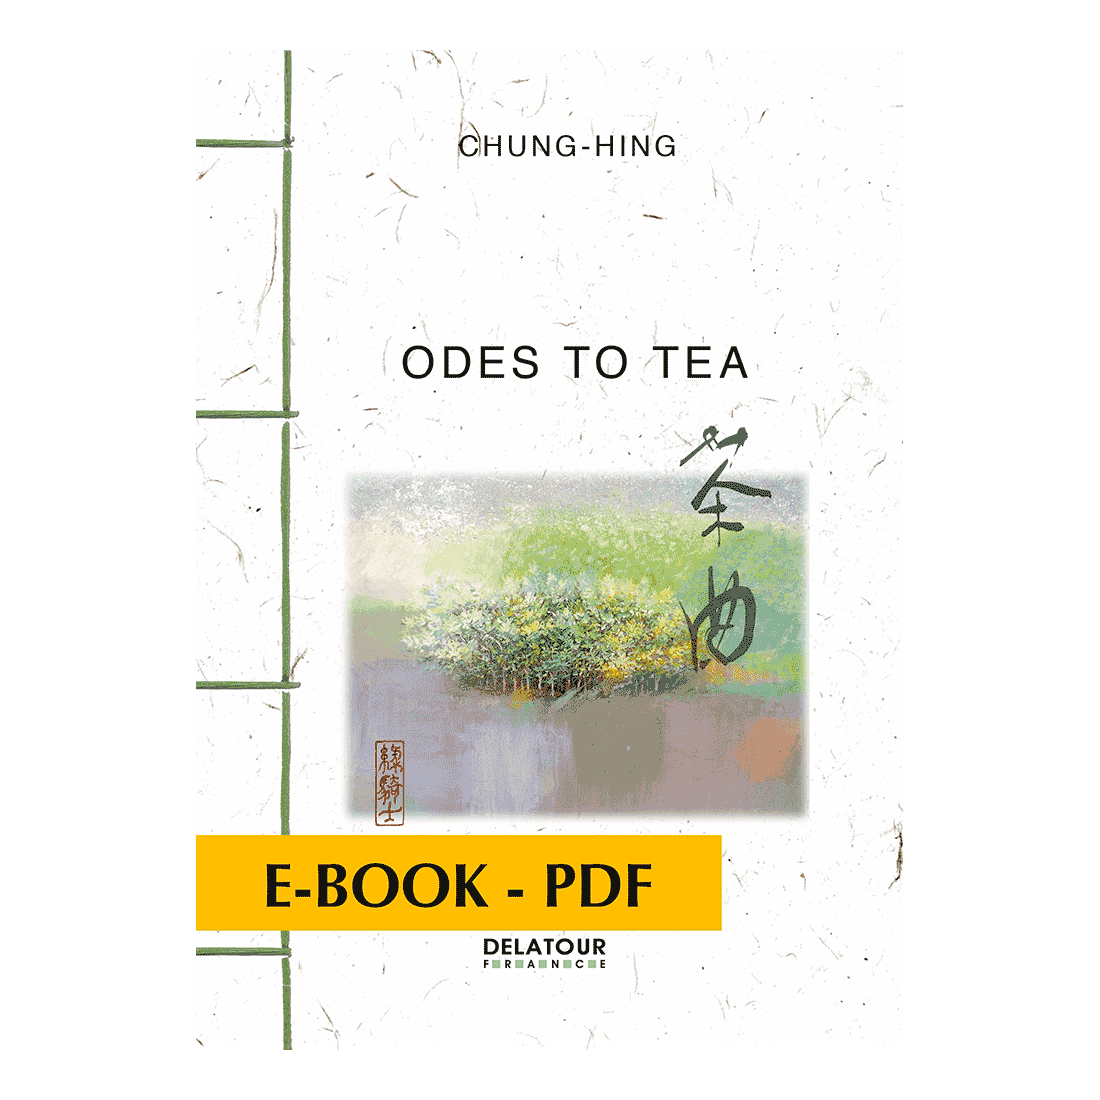 Odes to tea - E-book PDF